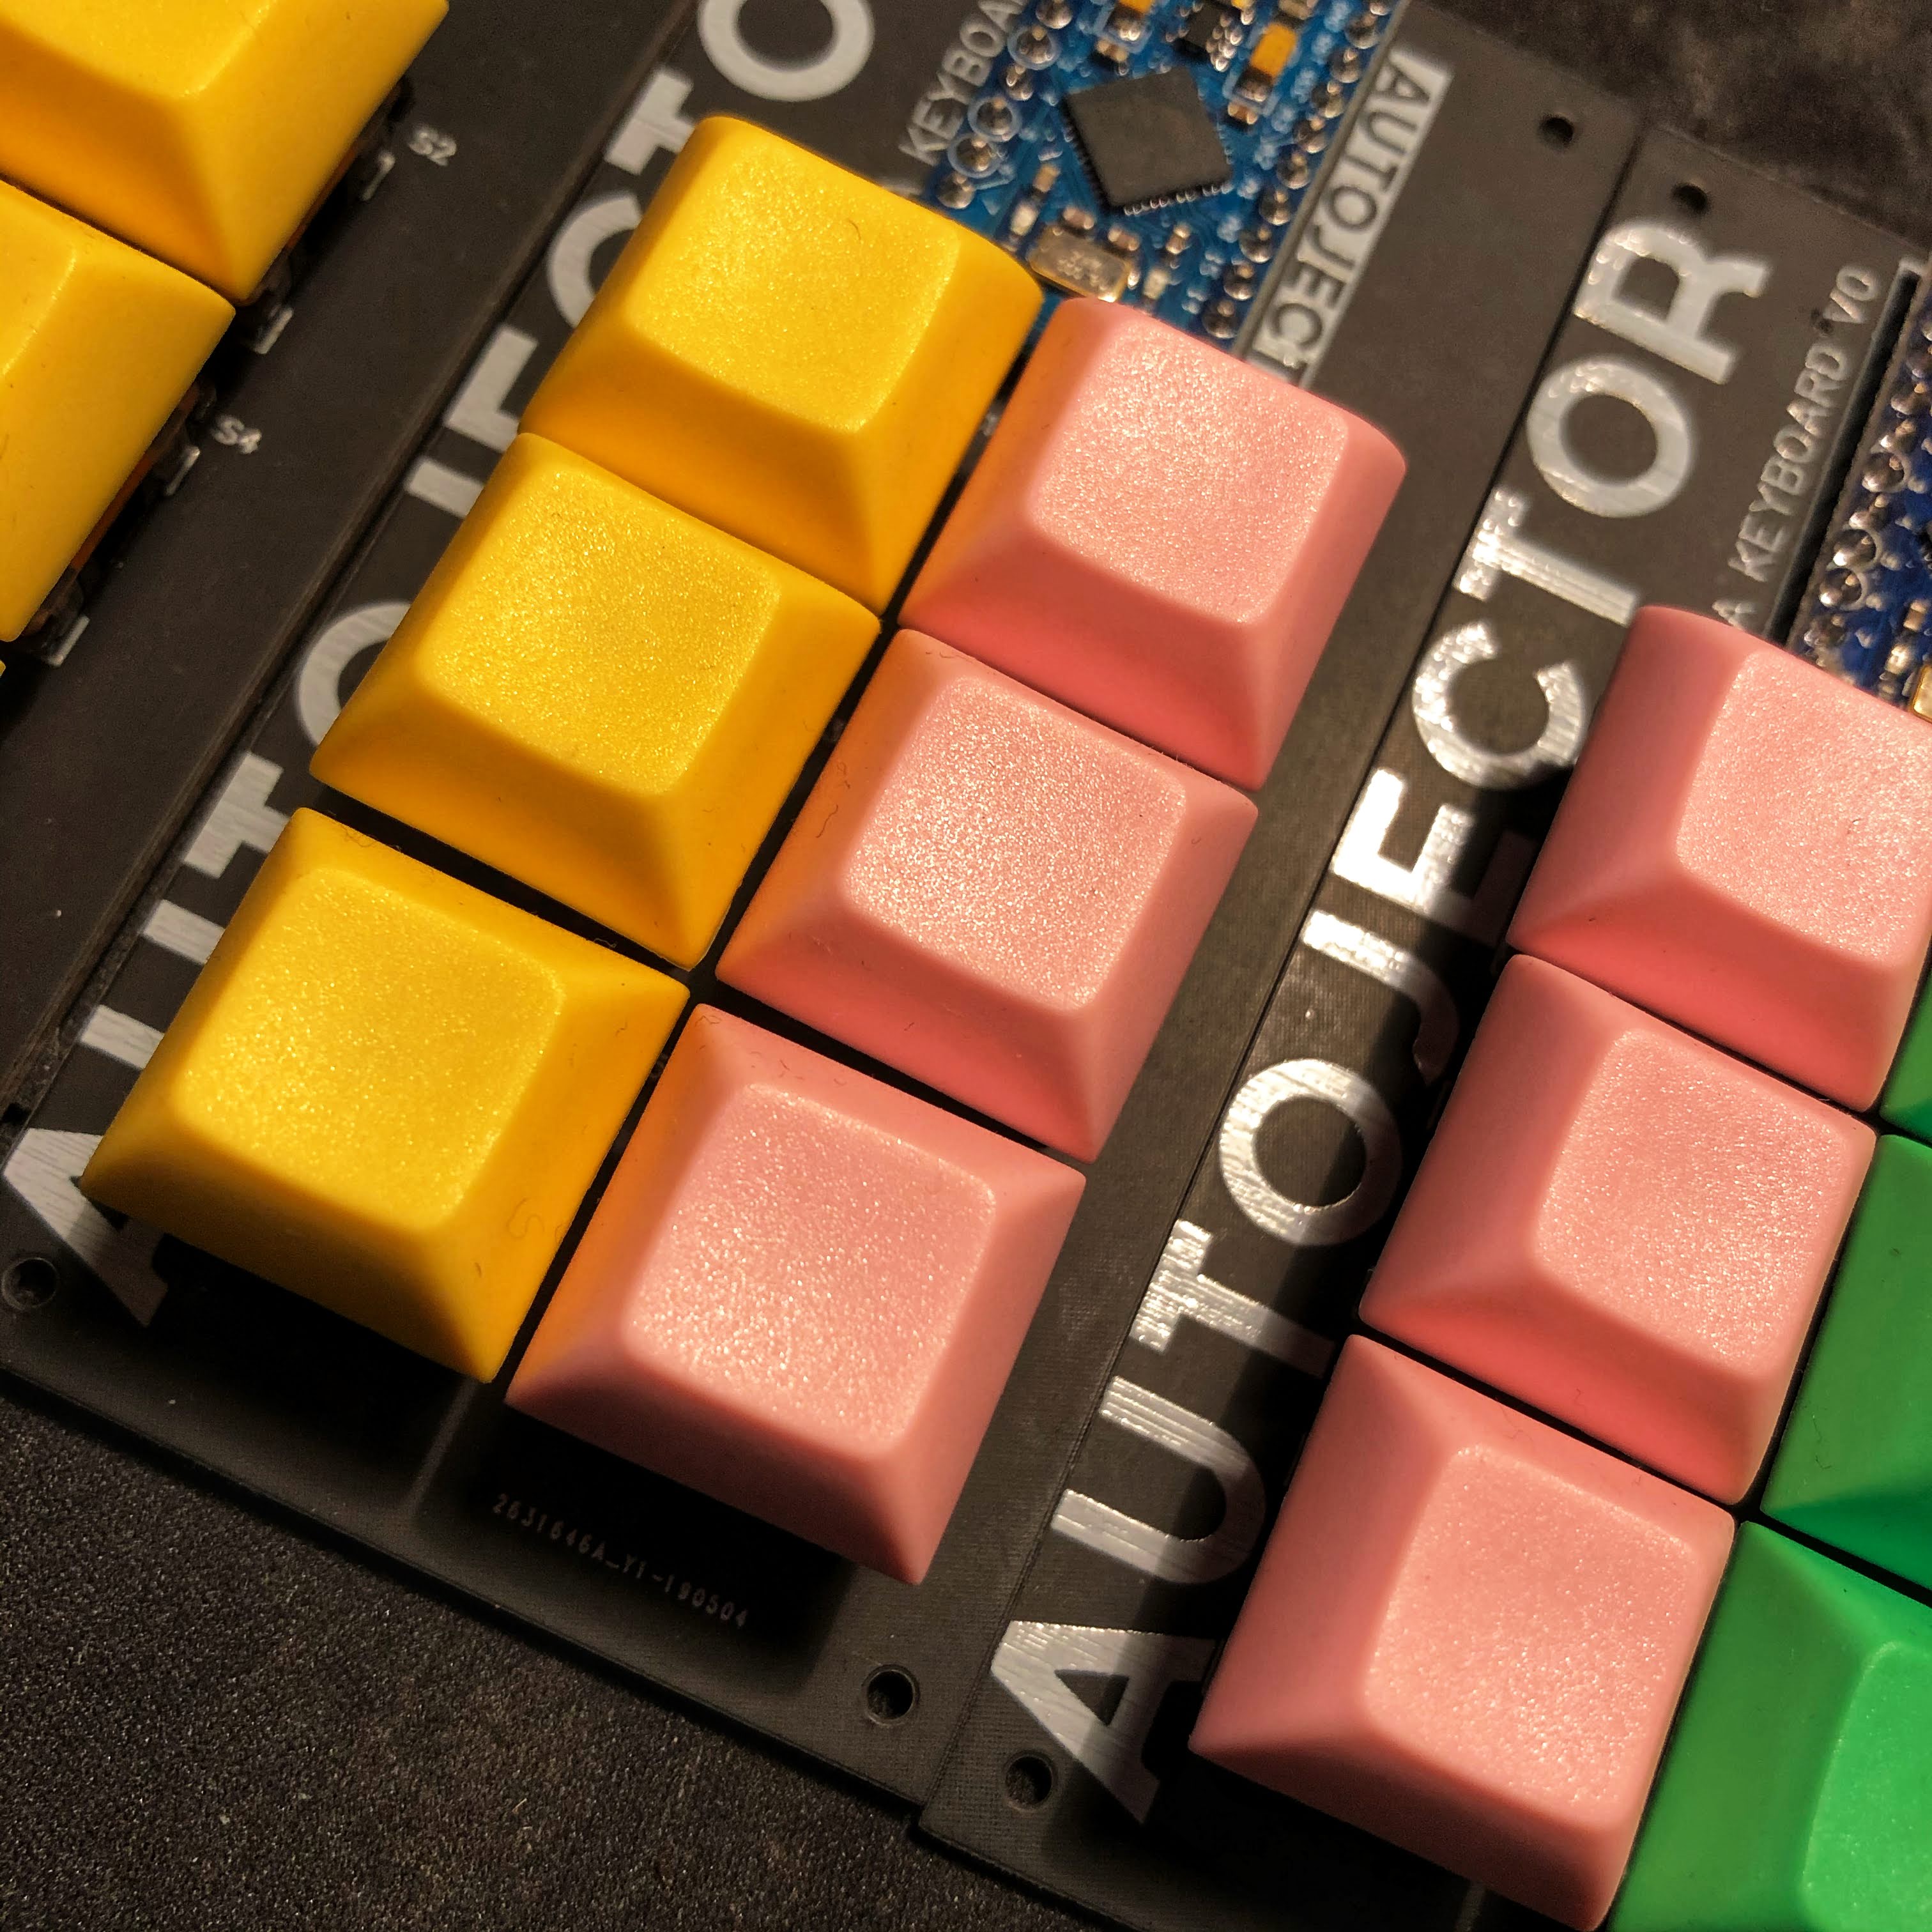 Autojector Keyboard close-up